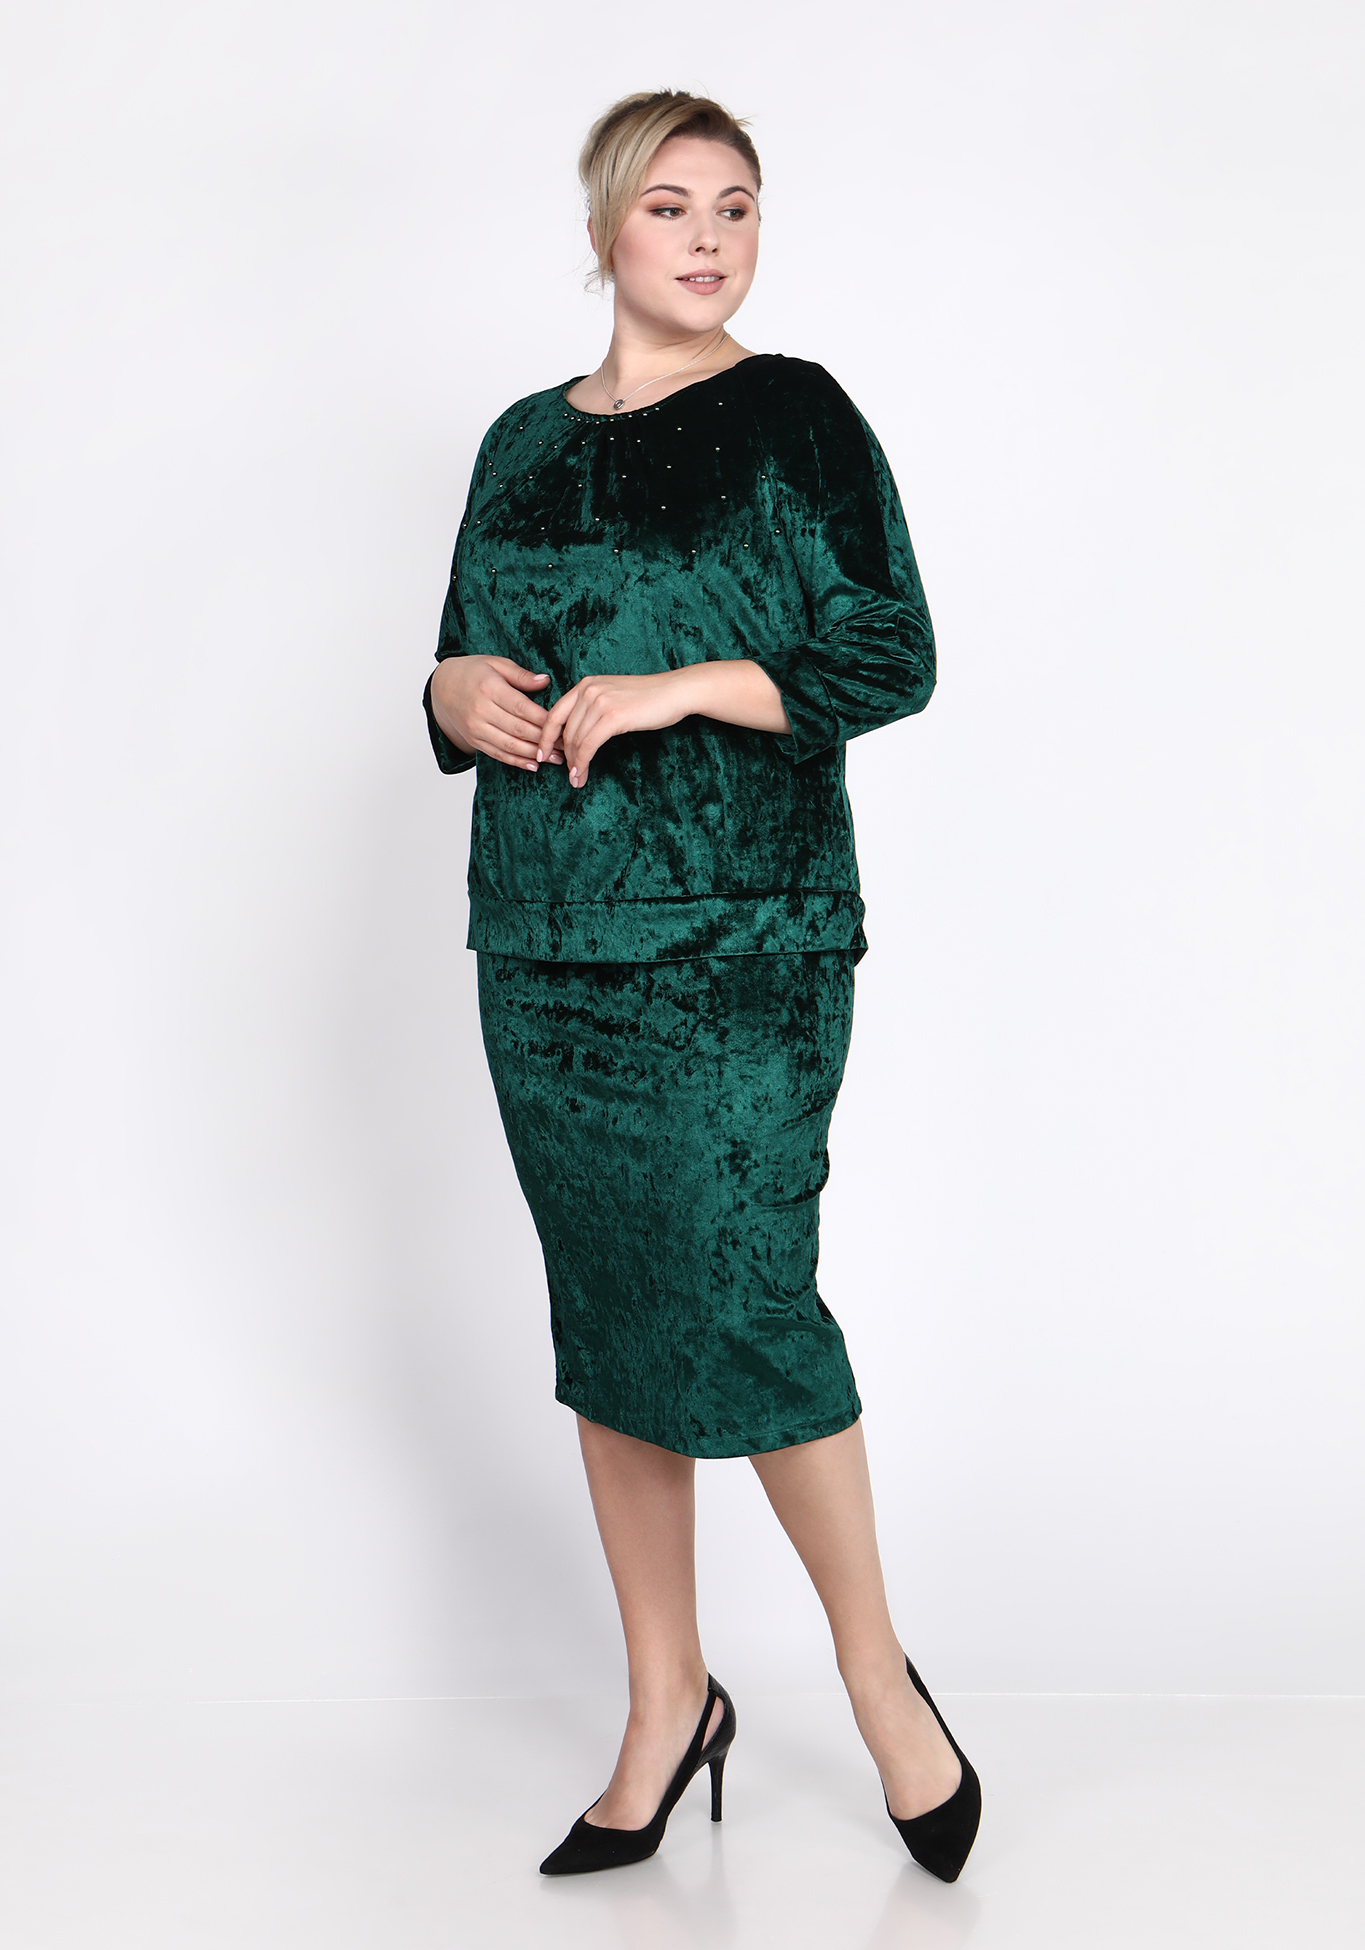 Костюм с юбкой из велюра Bianka Modeno, размер 50, цвет зелёный фантазийная - фото 3